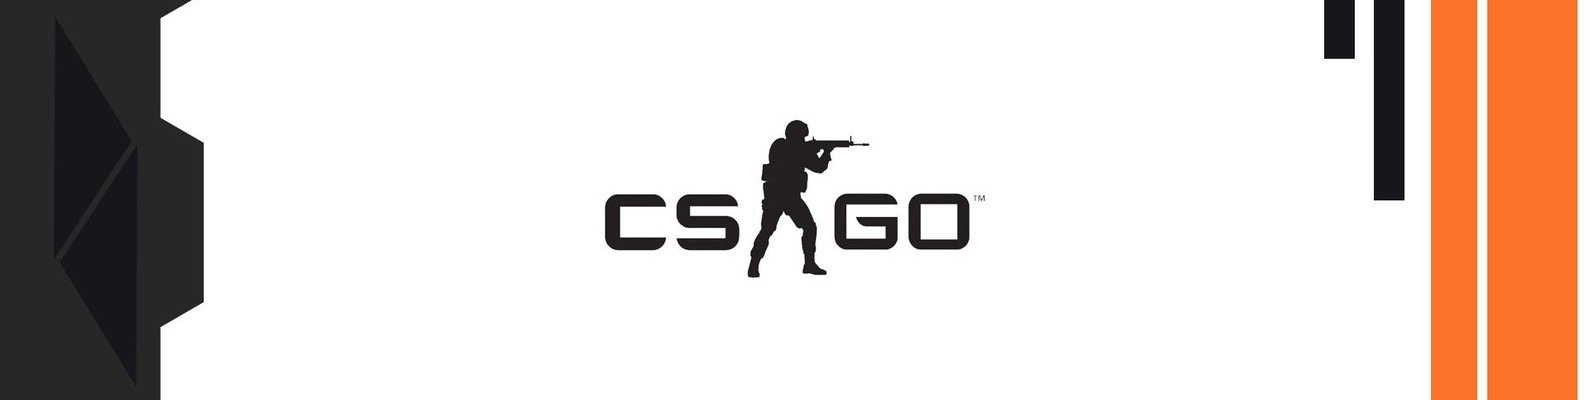 Кс го букв. КС надпись. CS go надпись. Логотип КС го. Counter-Strike: Global Offensive надпись.